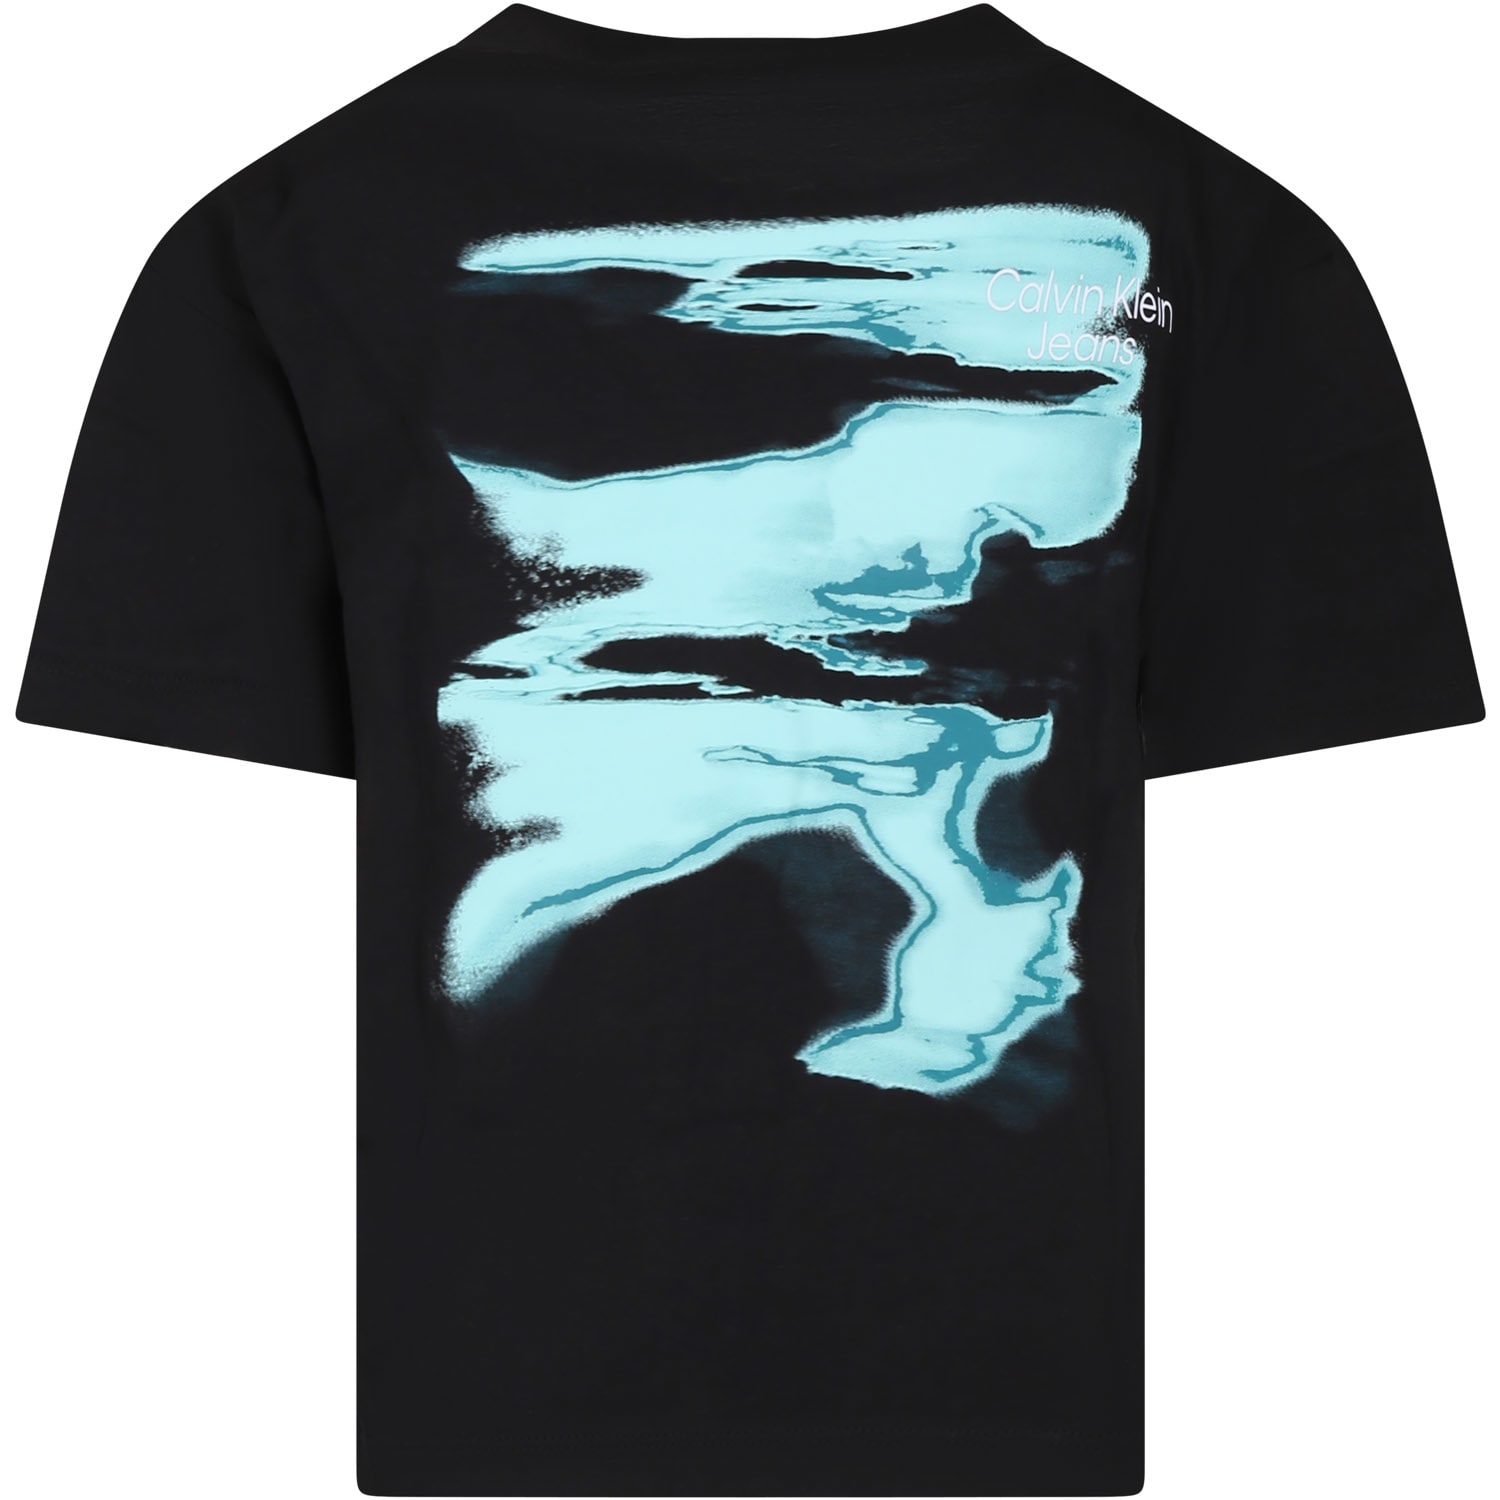 Shop Calvin Klein Black T-shirt For Boy With Logo